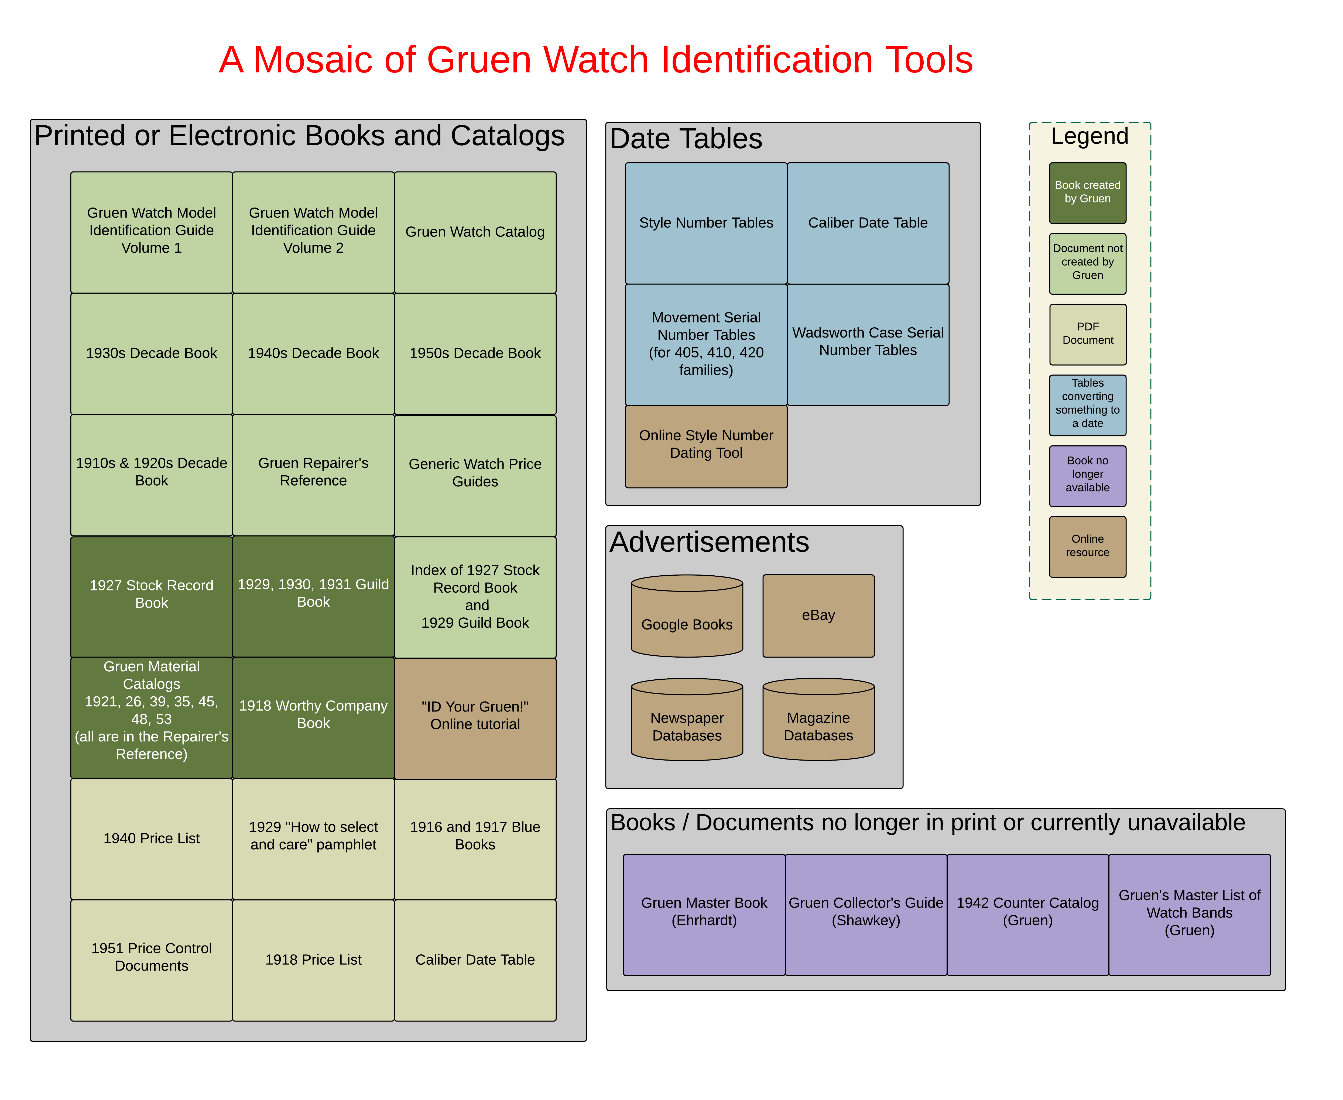 Mosaic of Gruen Watch Identification Tools